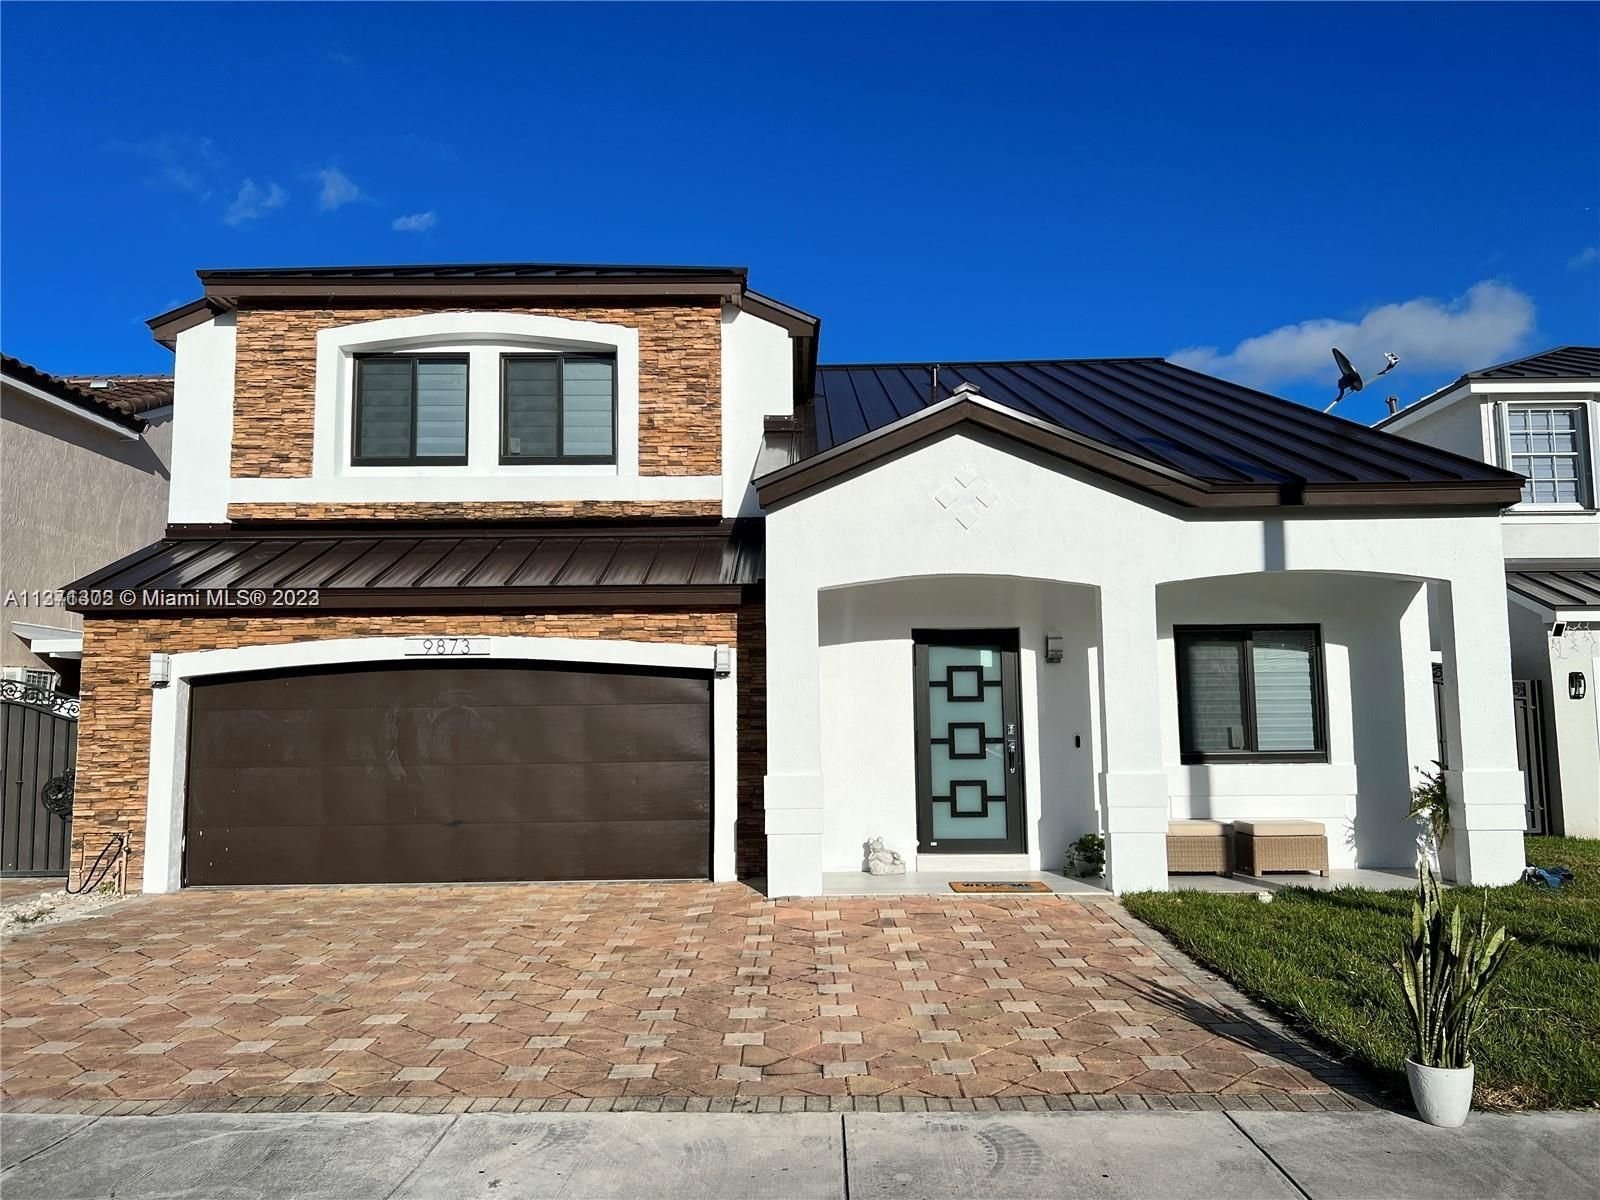 Real estate property located at 9873 154th Ct, Miami-Dade County, Miami, FL